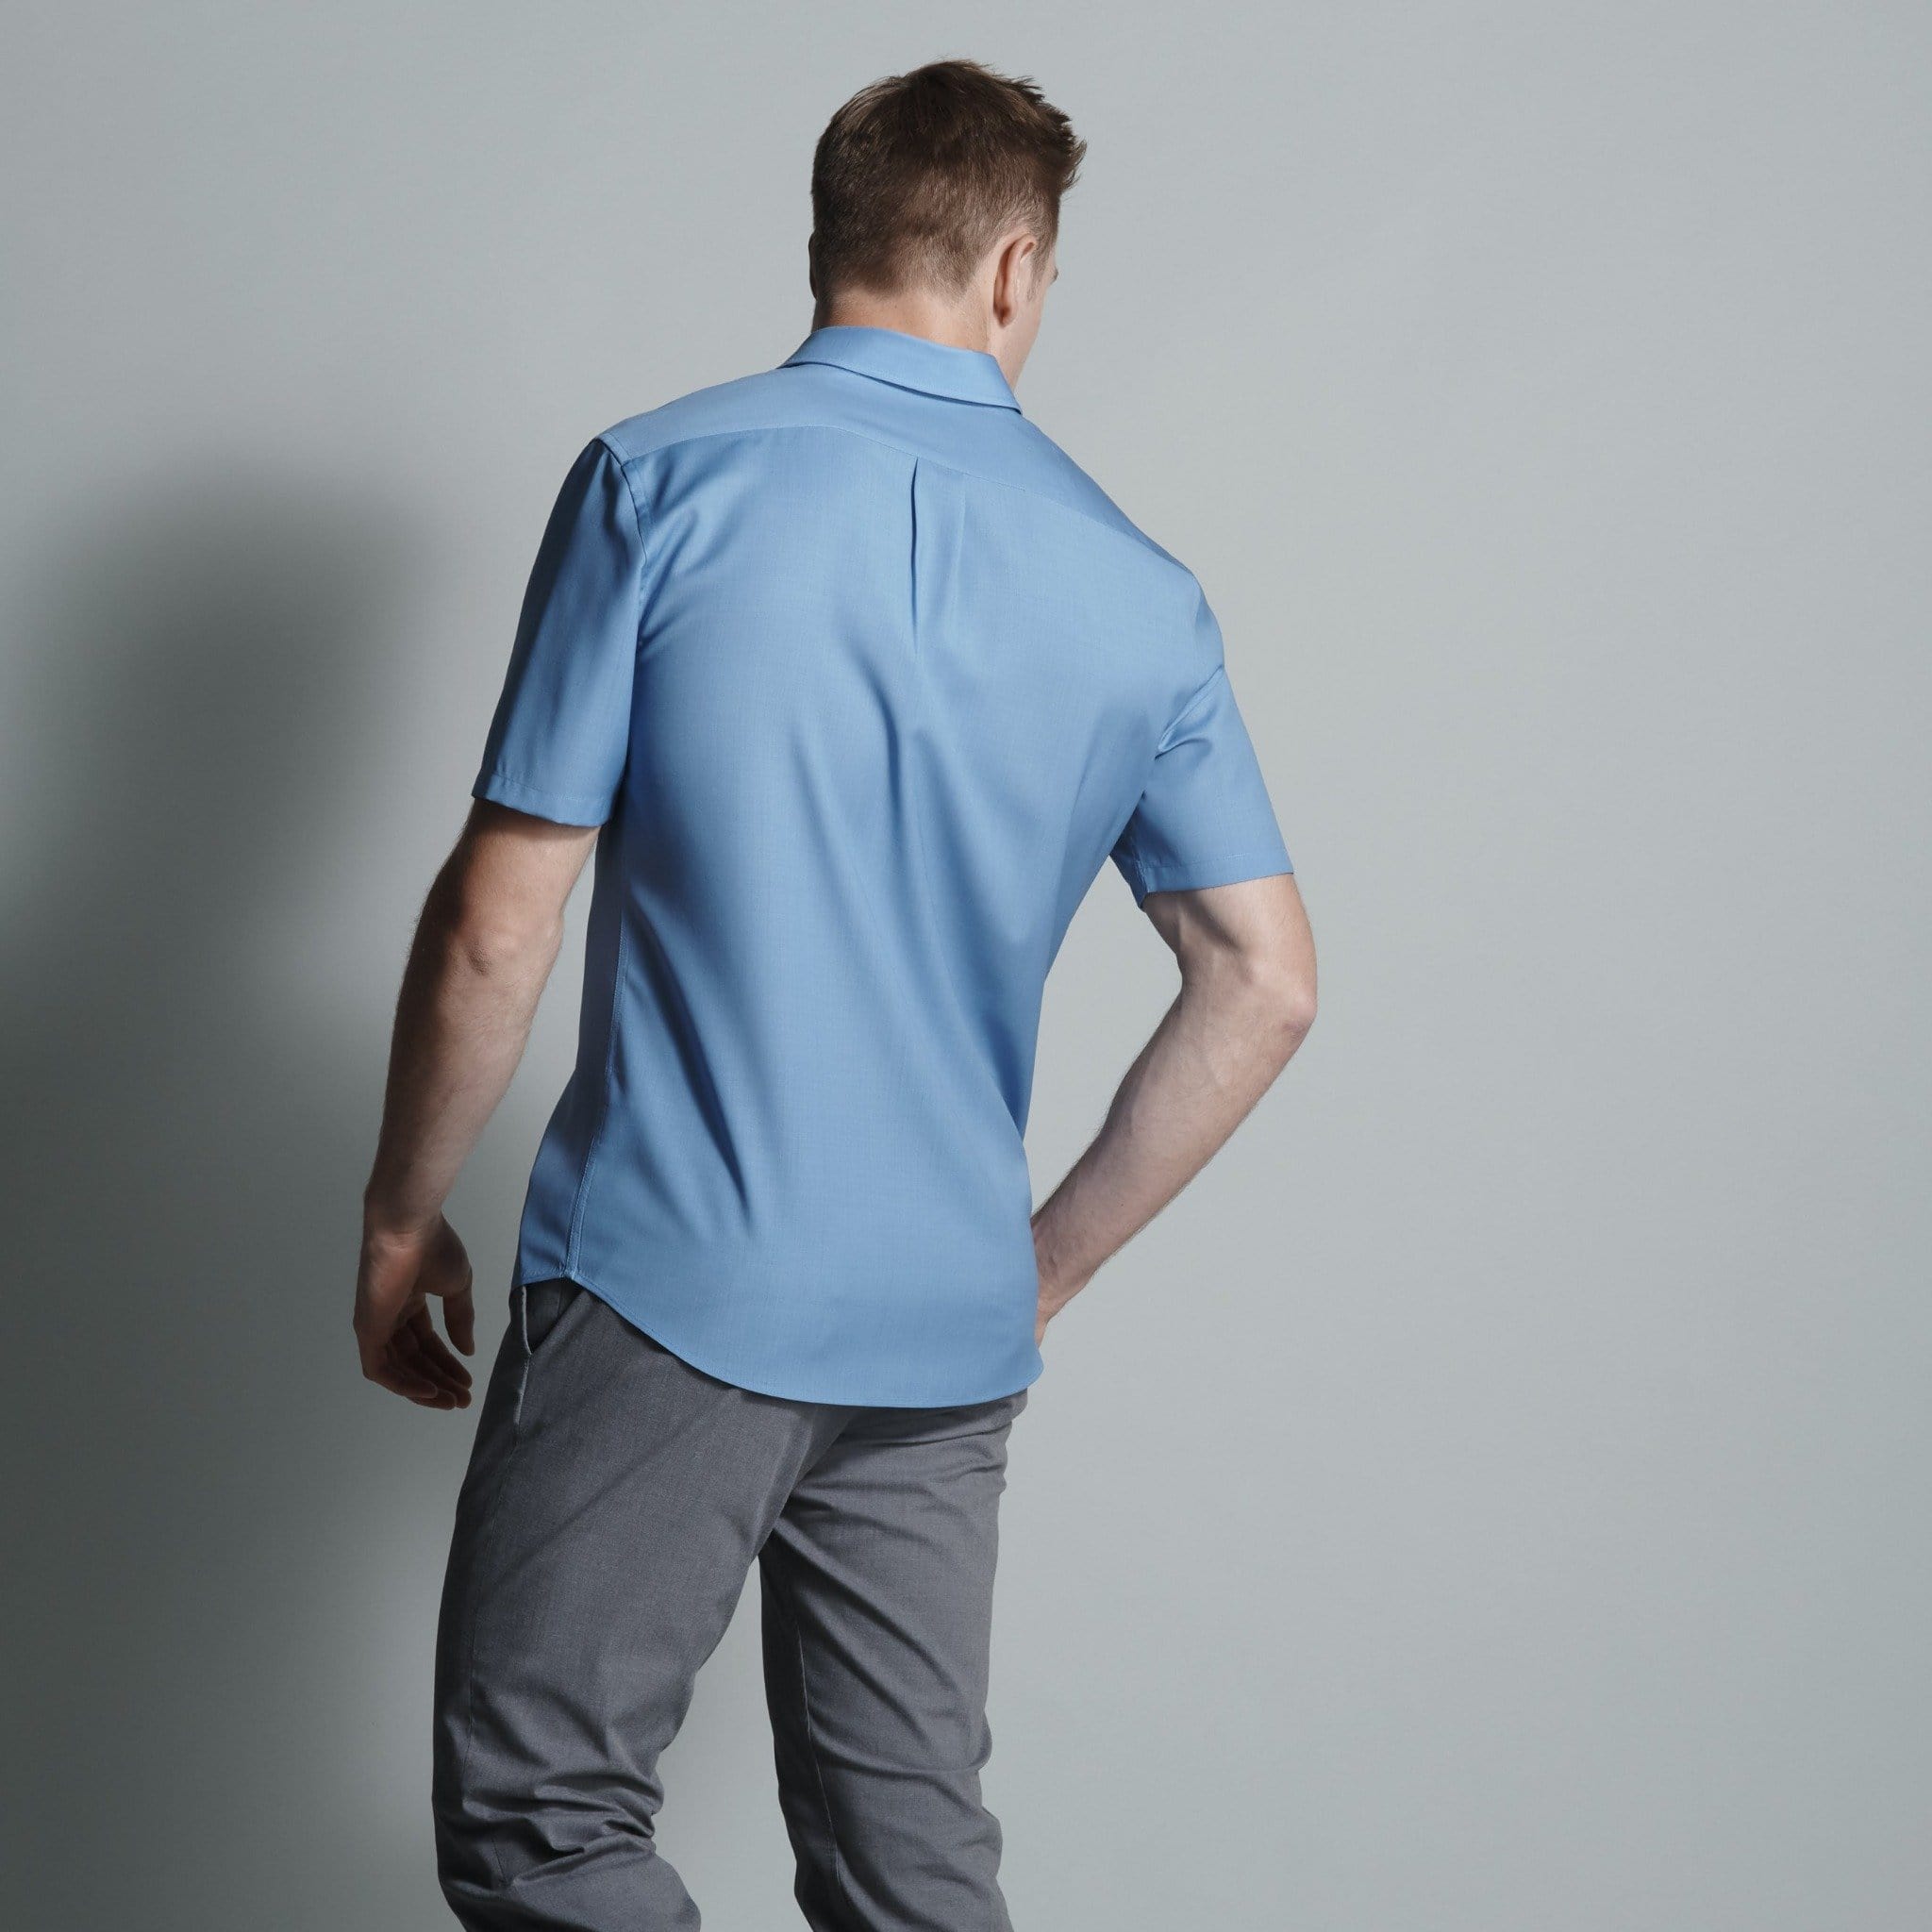 100% Merino Wool Short Sleeve | A Classy T-Shirt Alternative